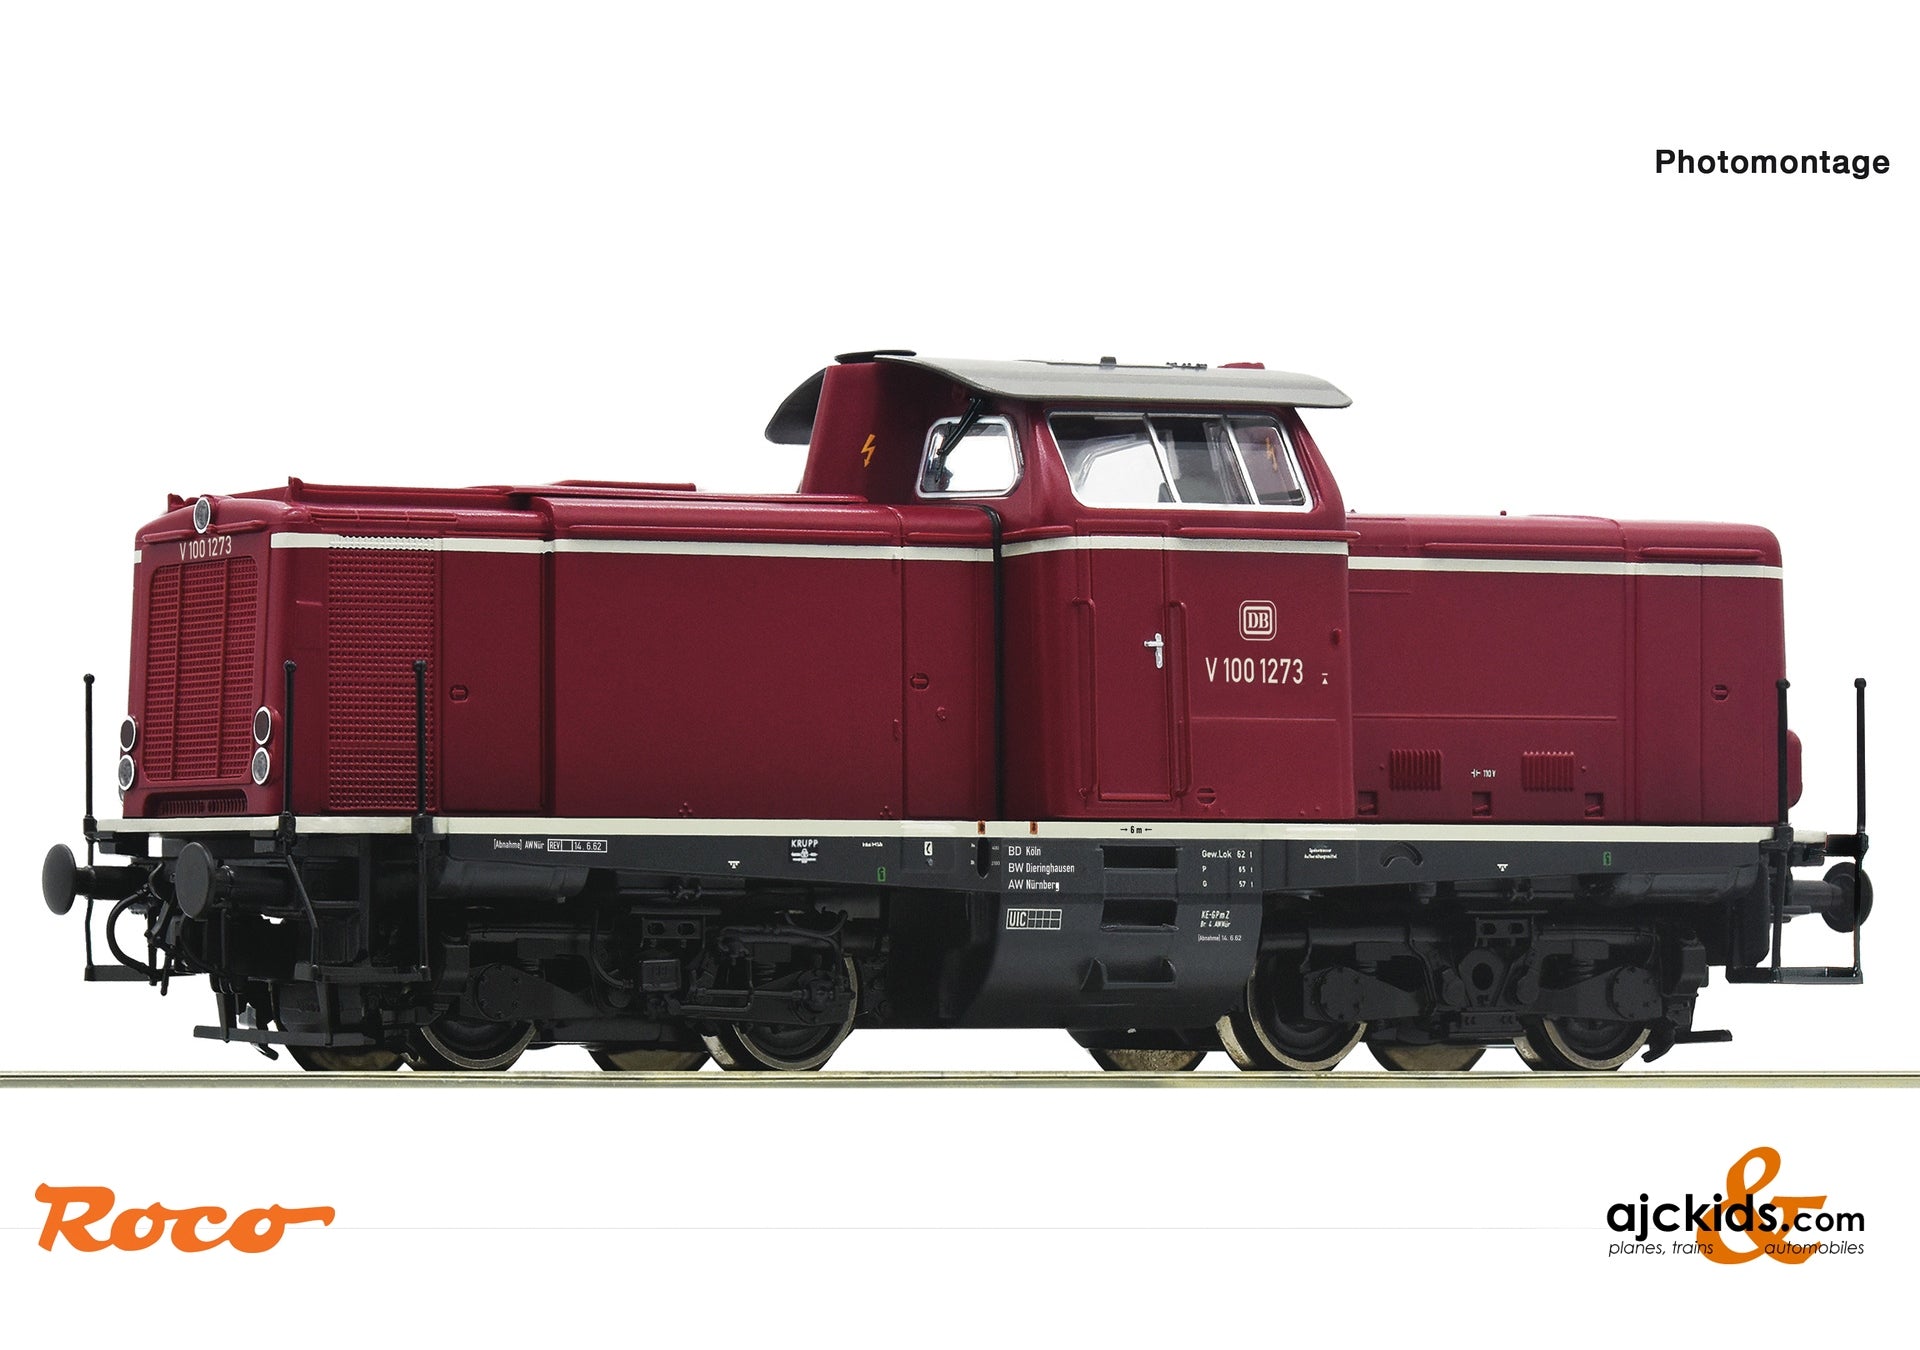 Roco 78980 - Diesel locomotive V 100 1273, DB at Ajckids.com